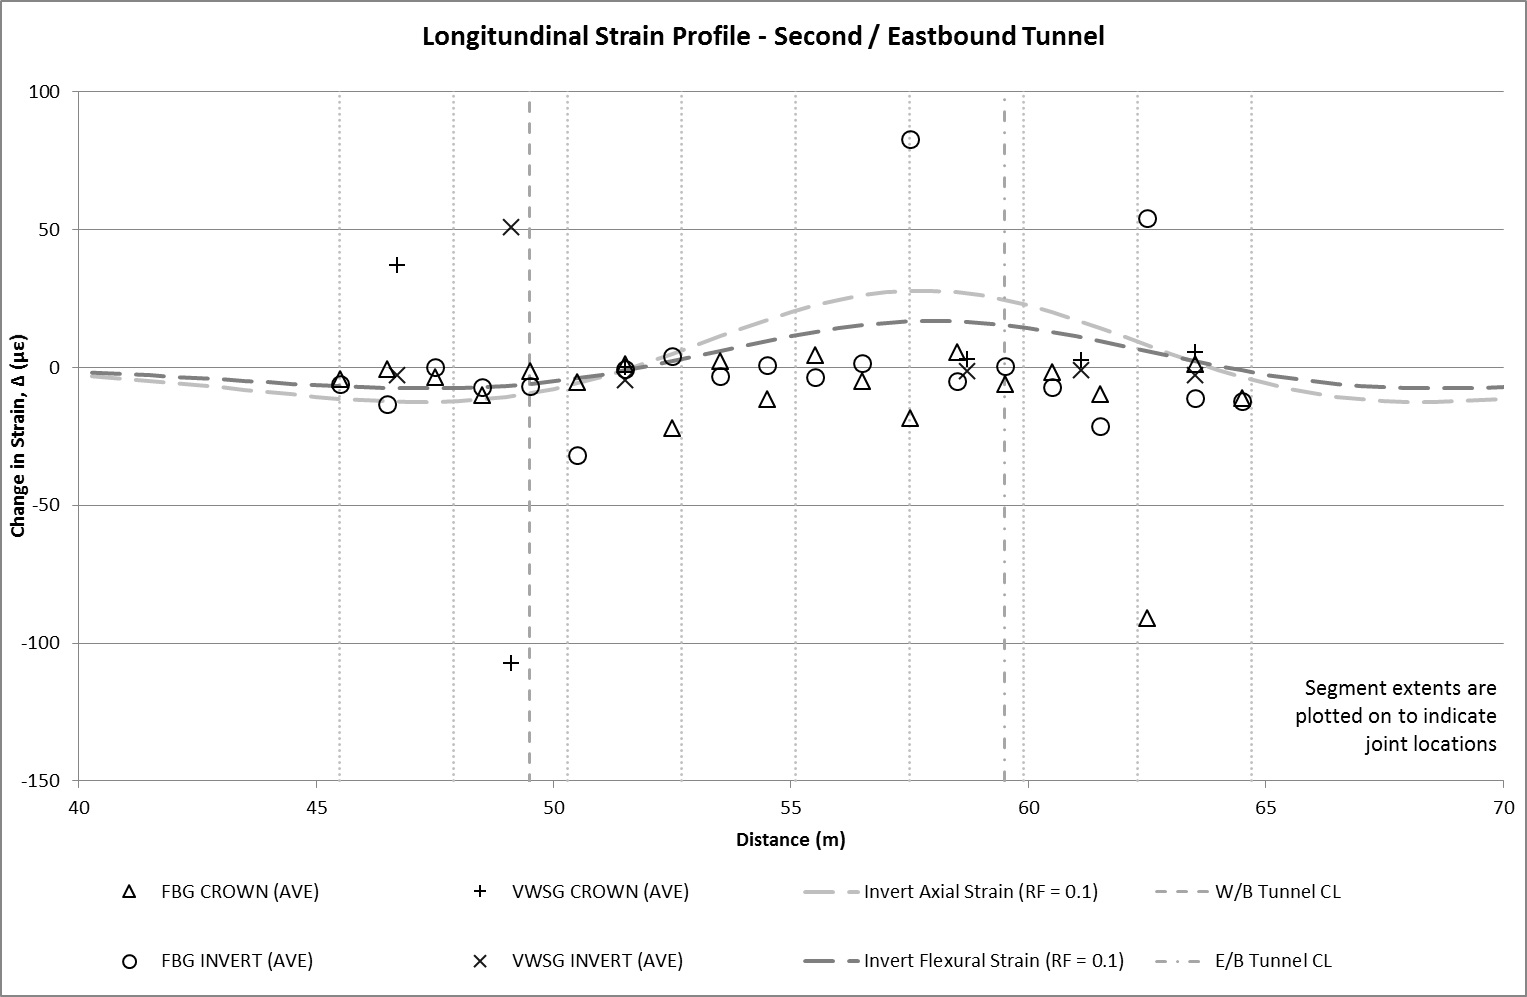 Figure 13b - Longitudinal strain profile after second / eastbound tunnel construction